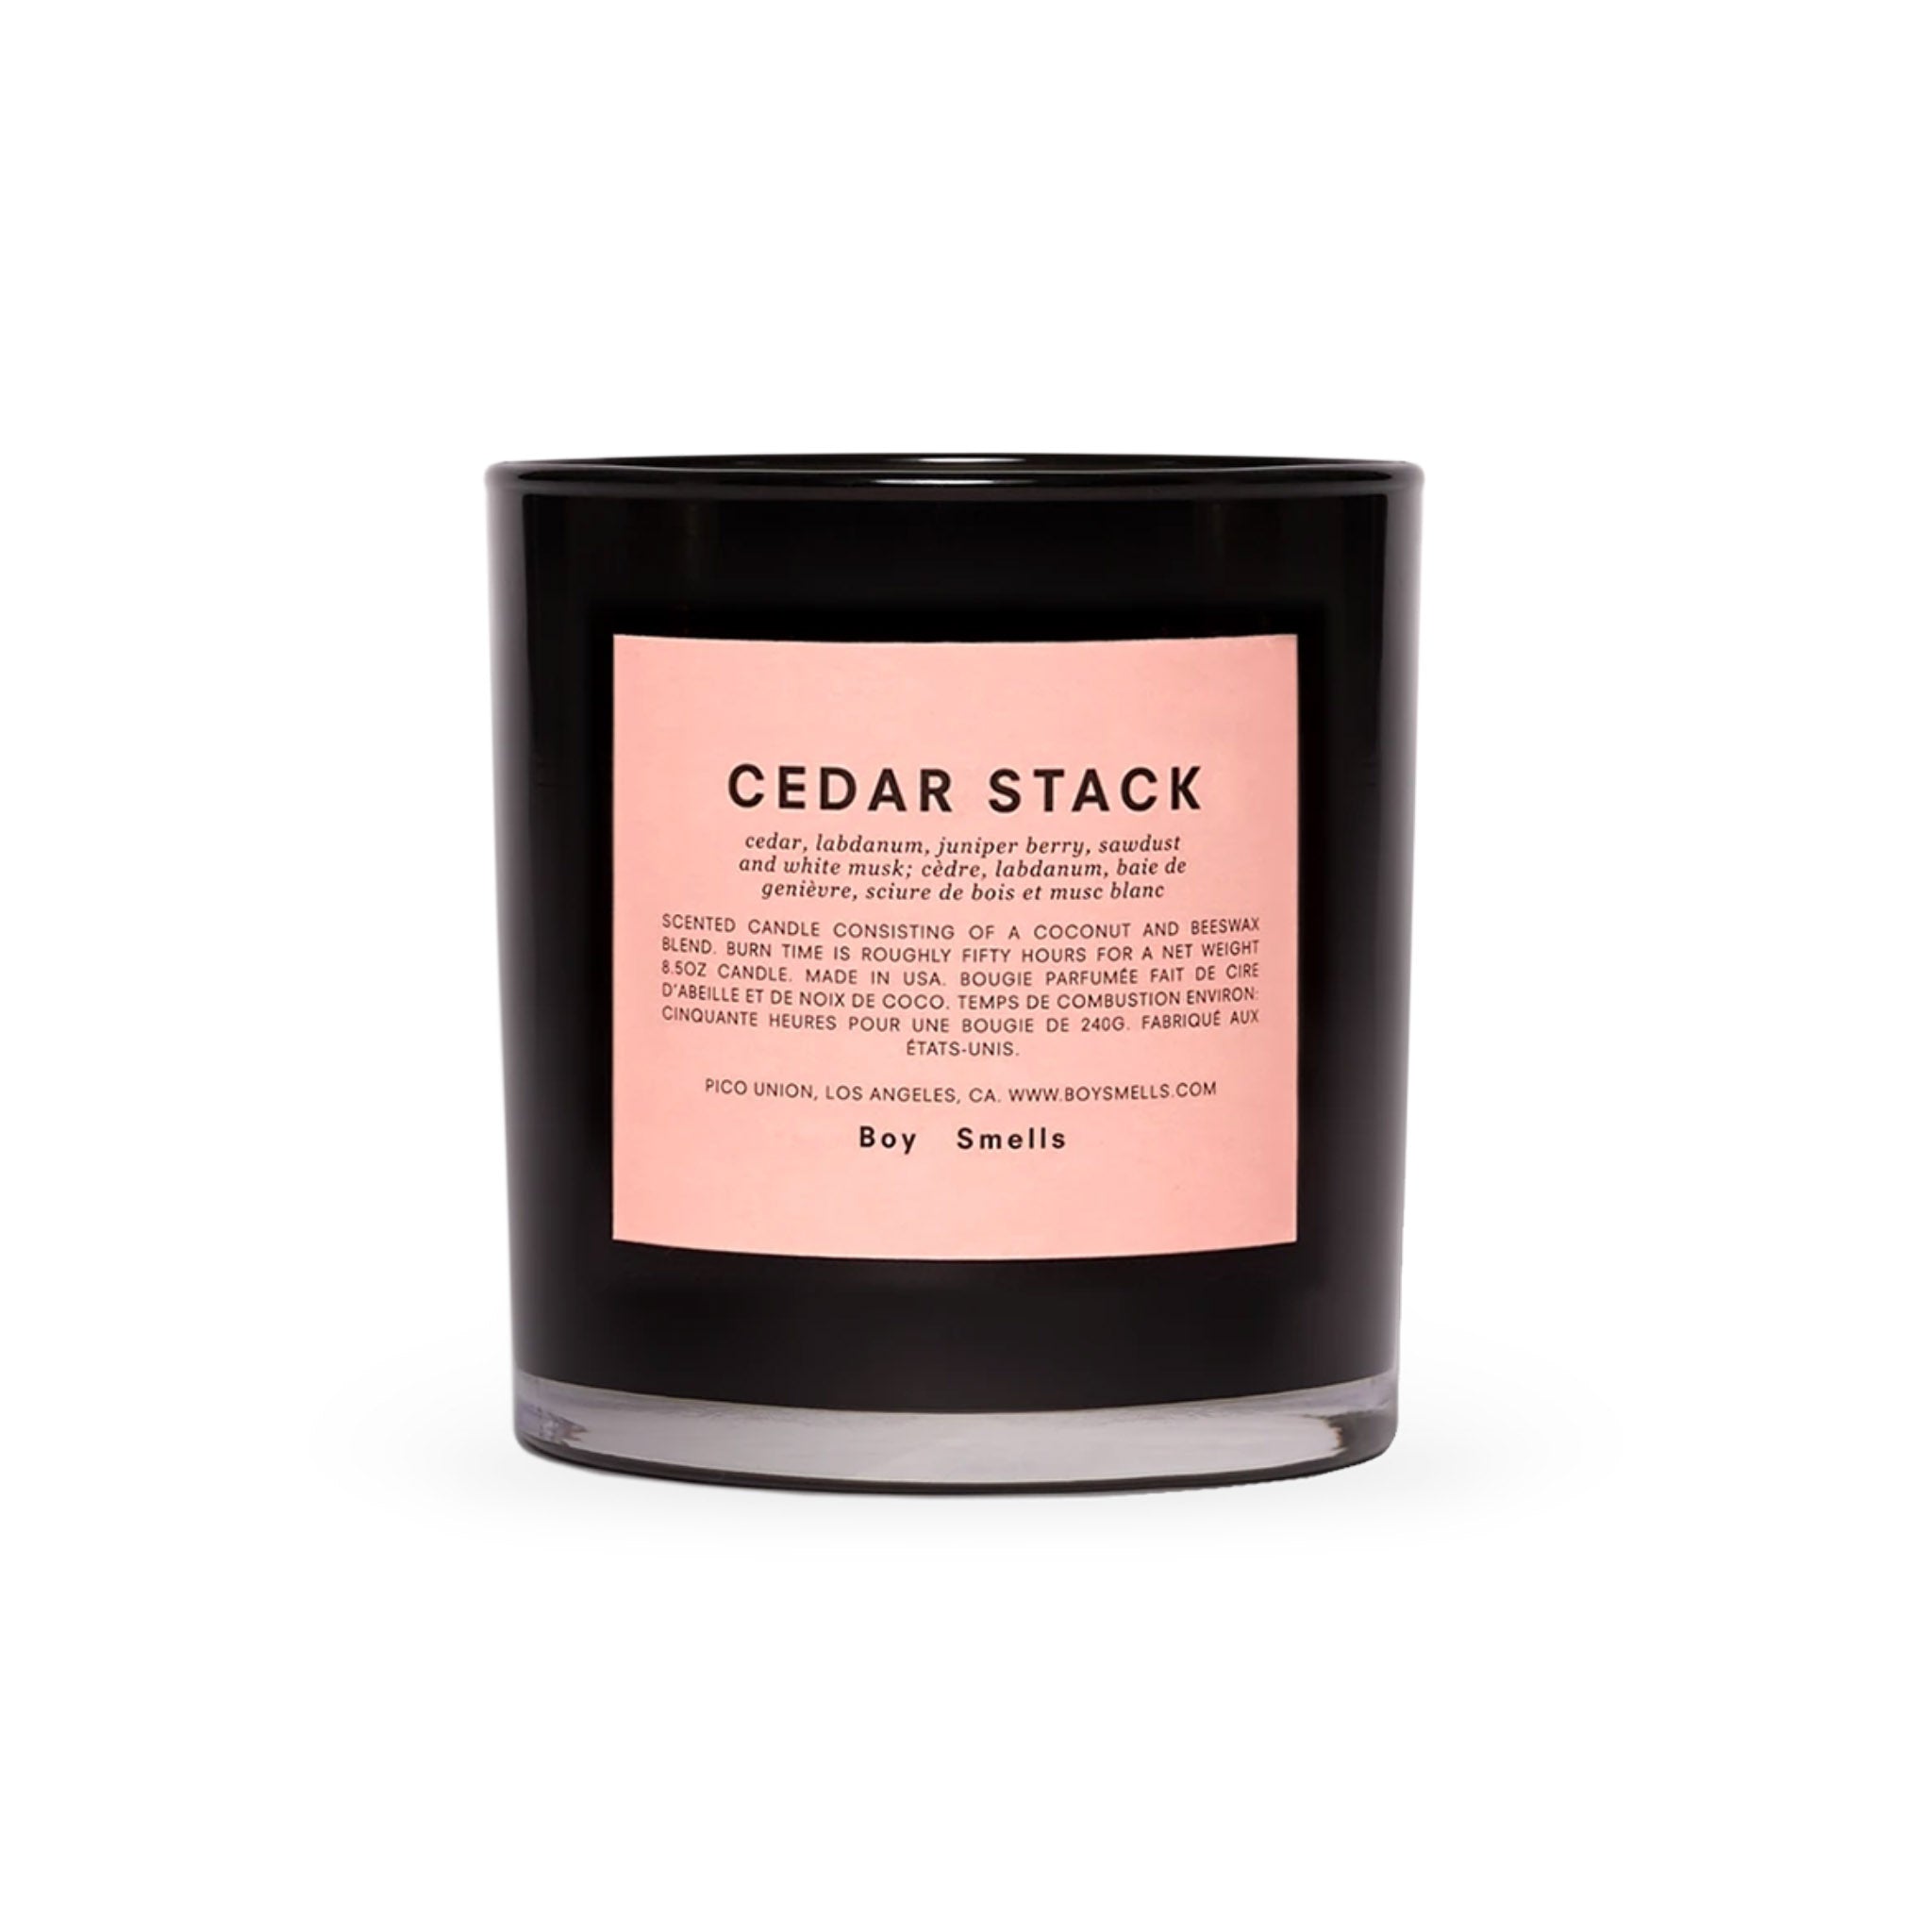 Boy Smells Cedar Stack Candle - August Shop